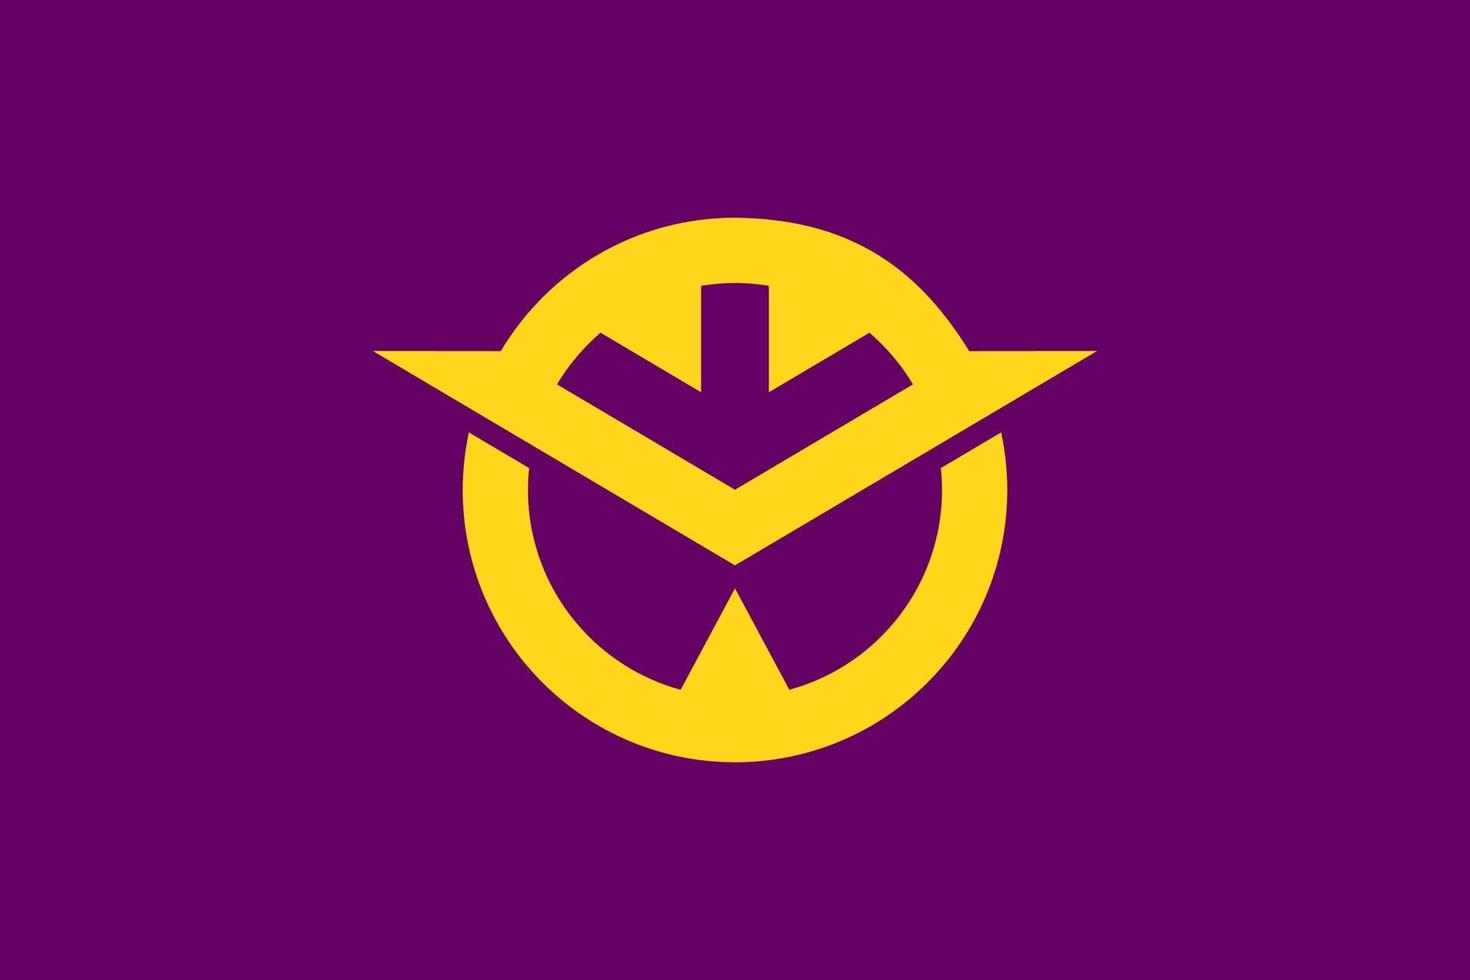 okej flagga, japan prefektur. vektor illustration